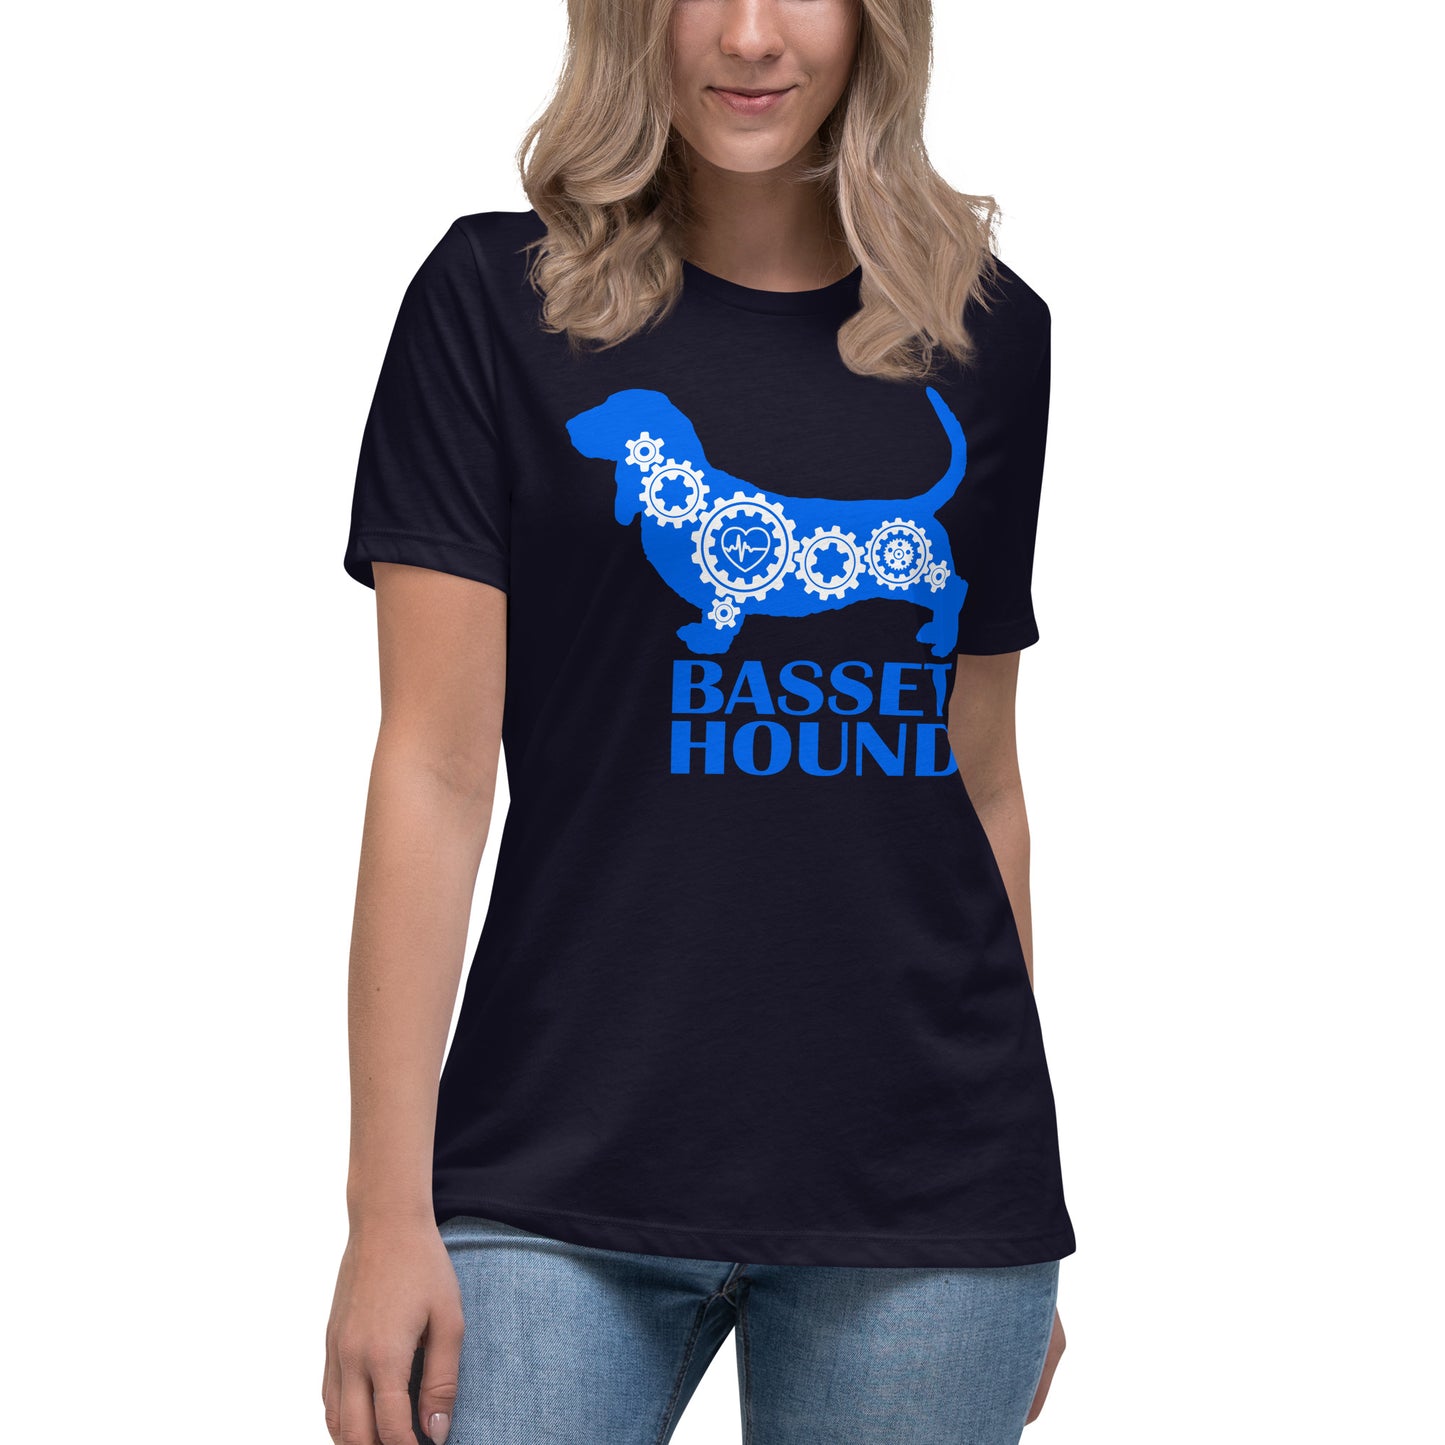 Basset Hound Bionic women’s navy t-shirt by Dog Artistry.